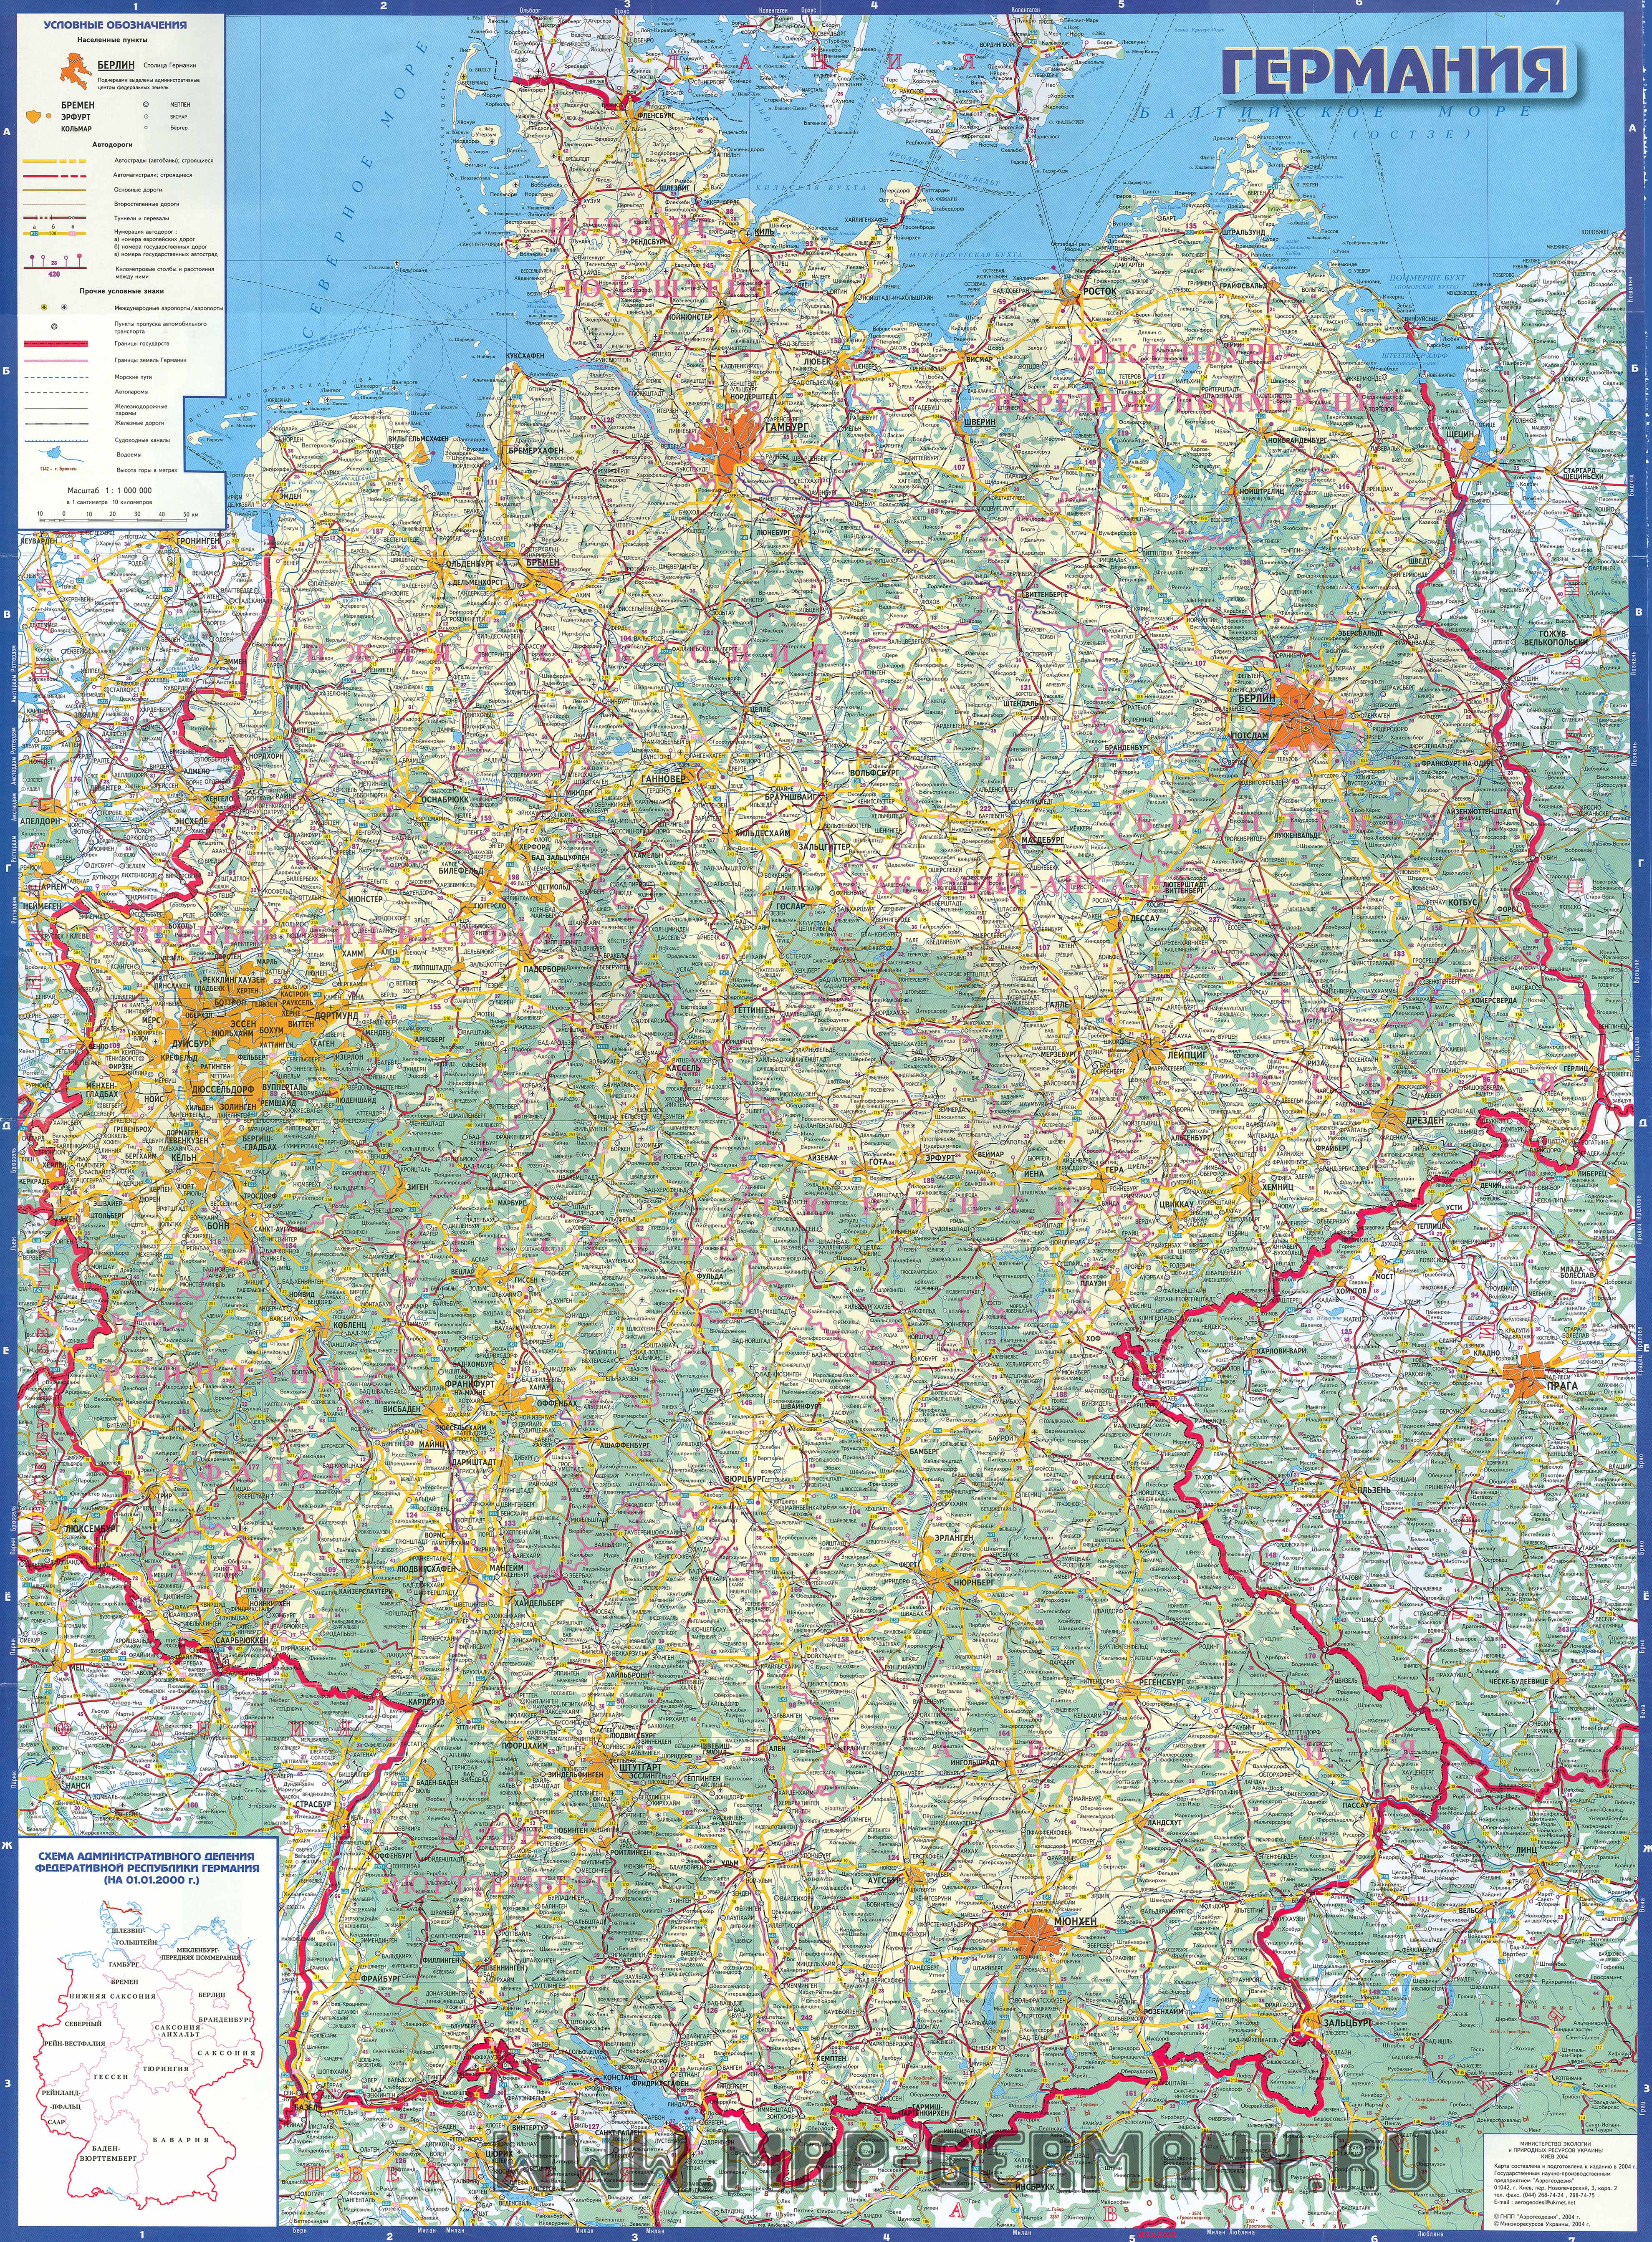 Mapa de carreteras de Alemania